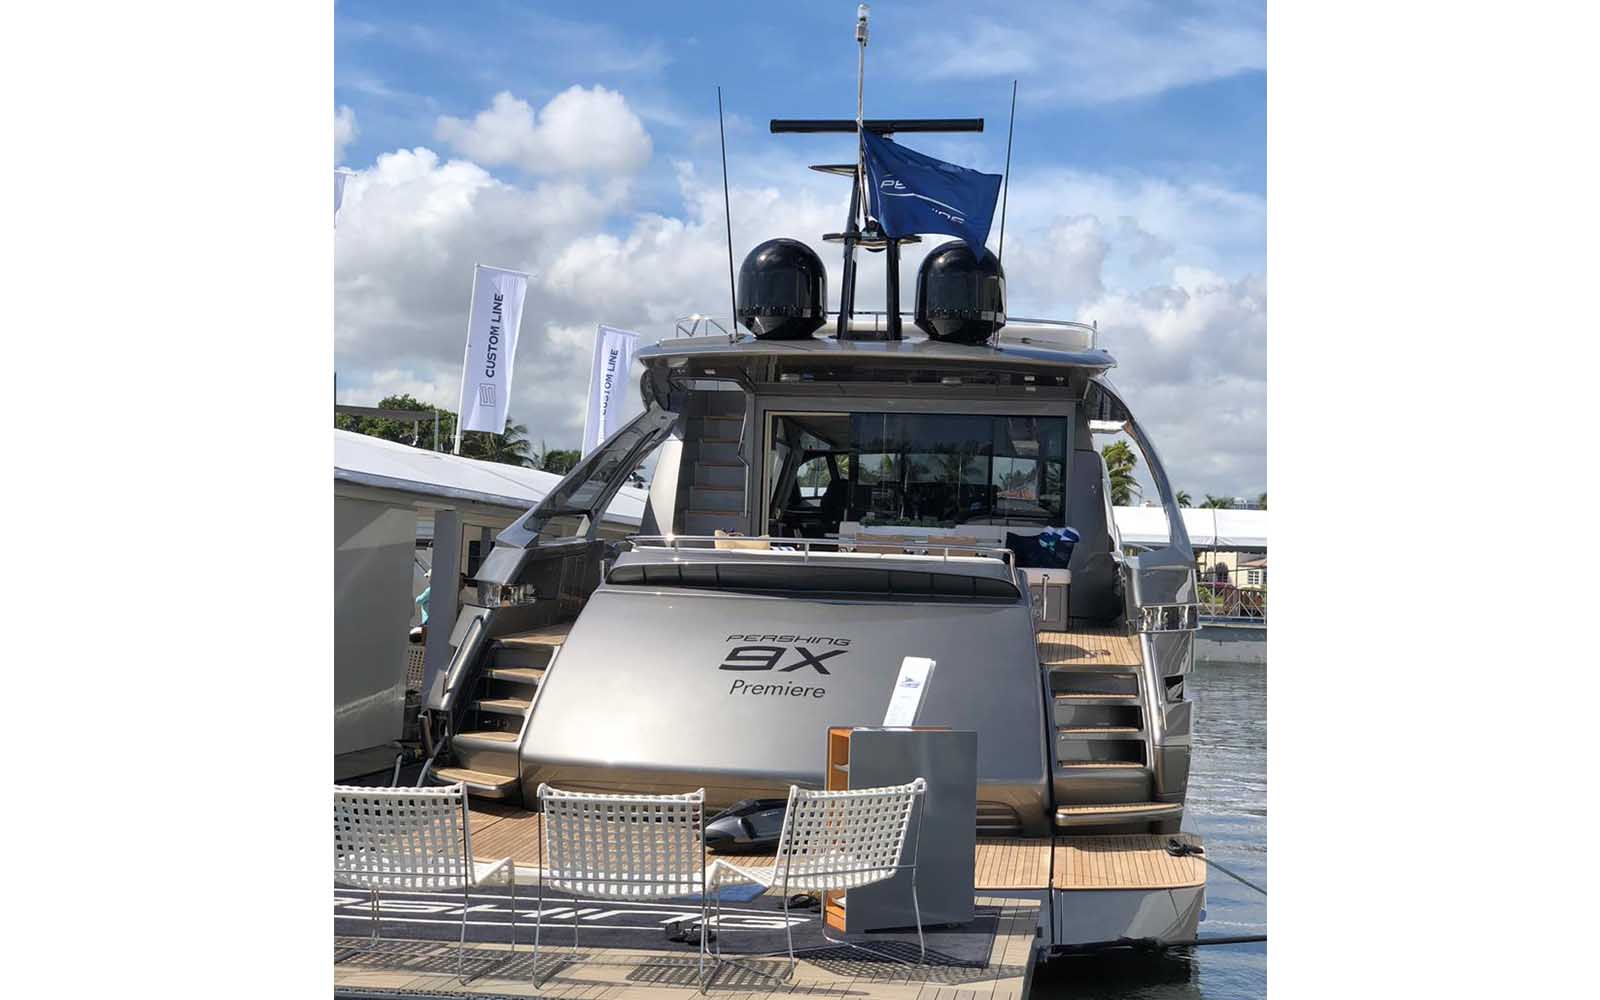 Fort Lauderdale International Boat Show-Pershing 9X-boatshopping